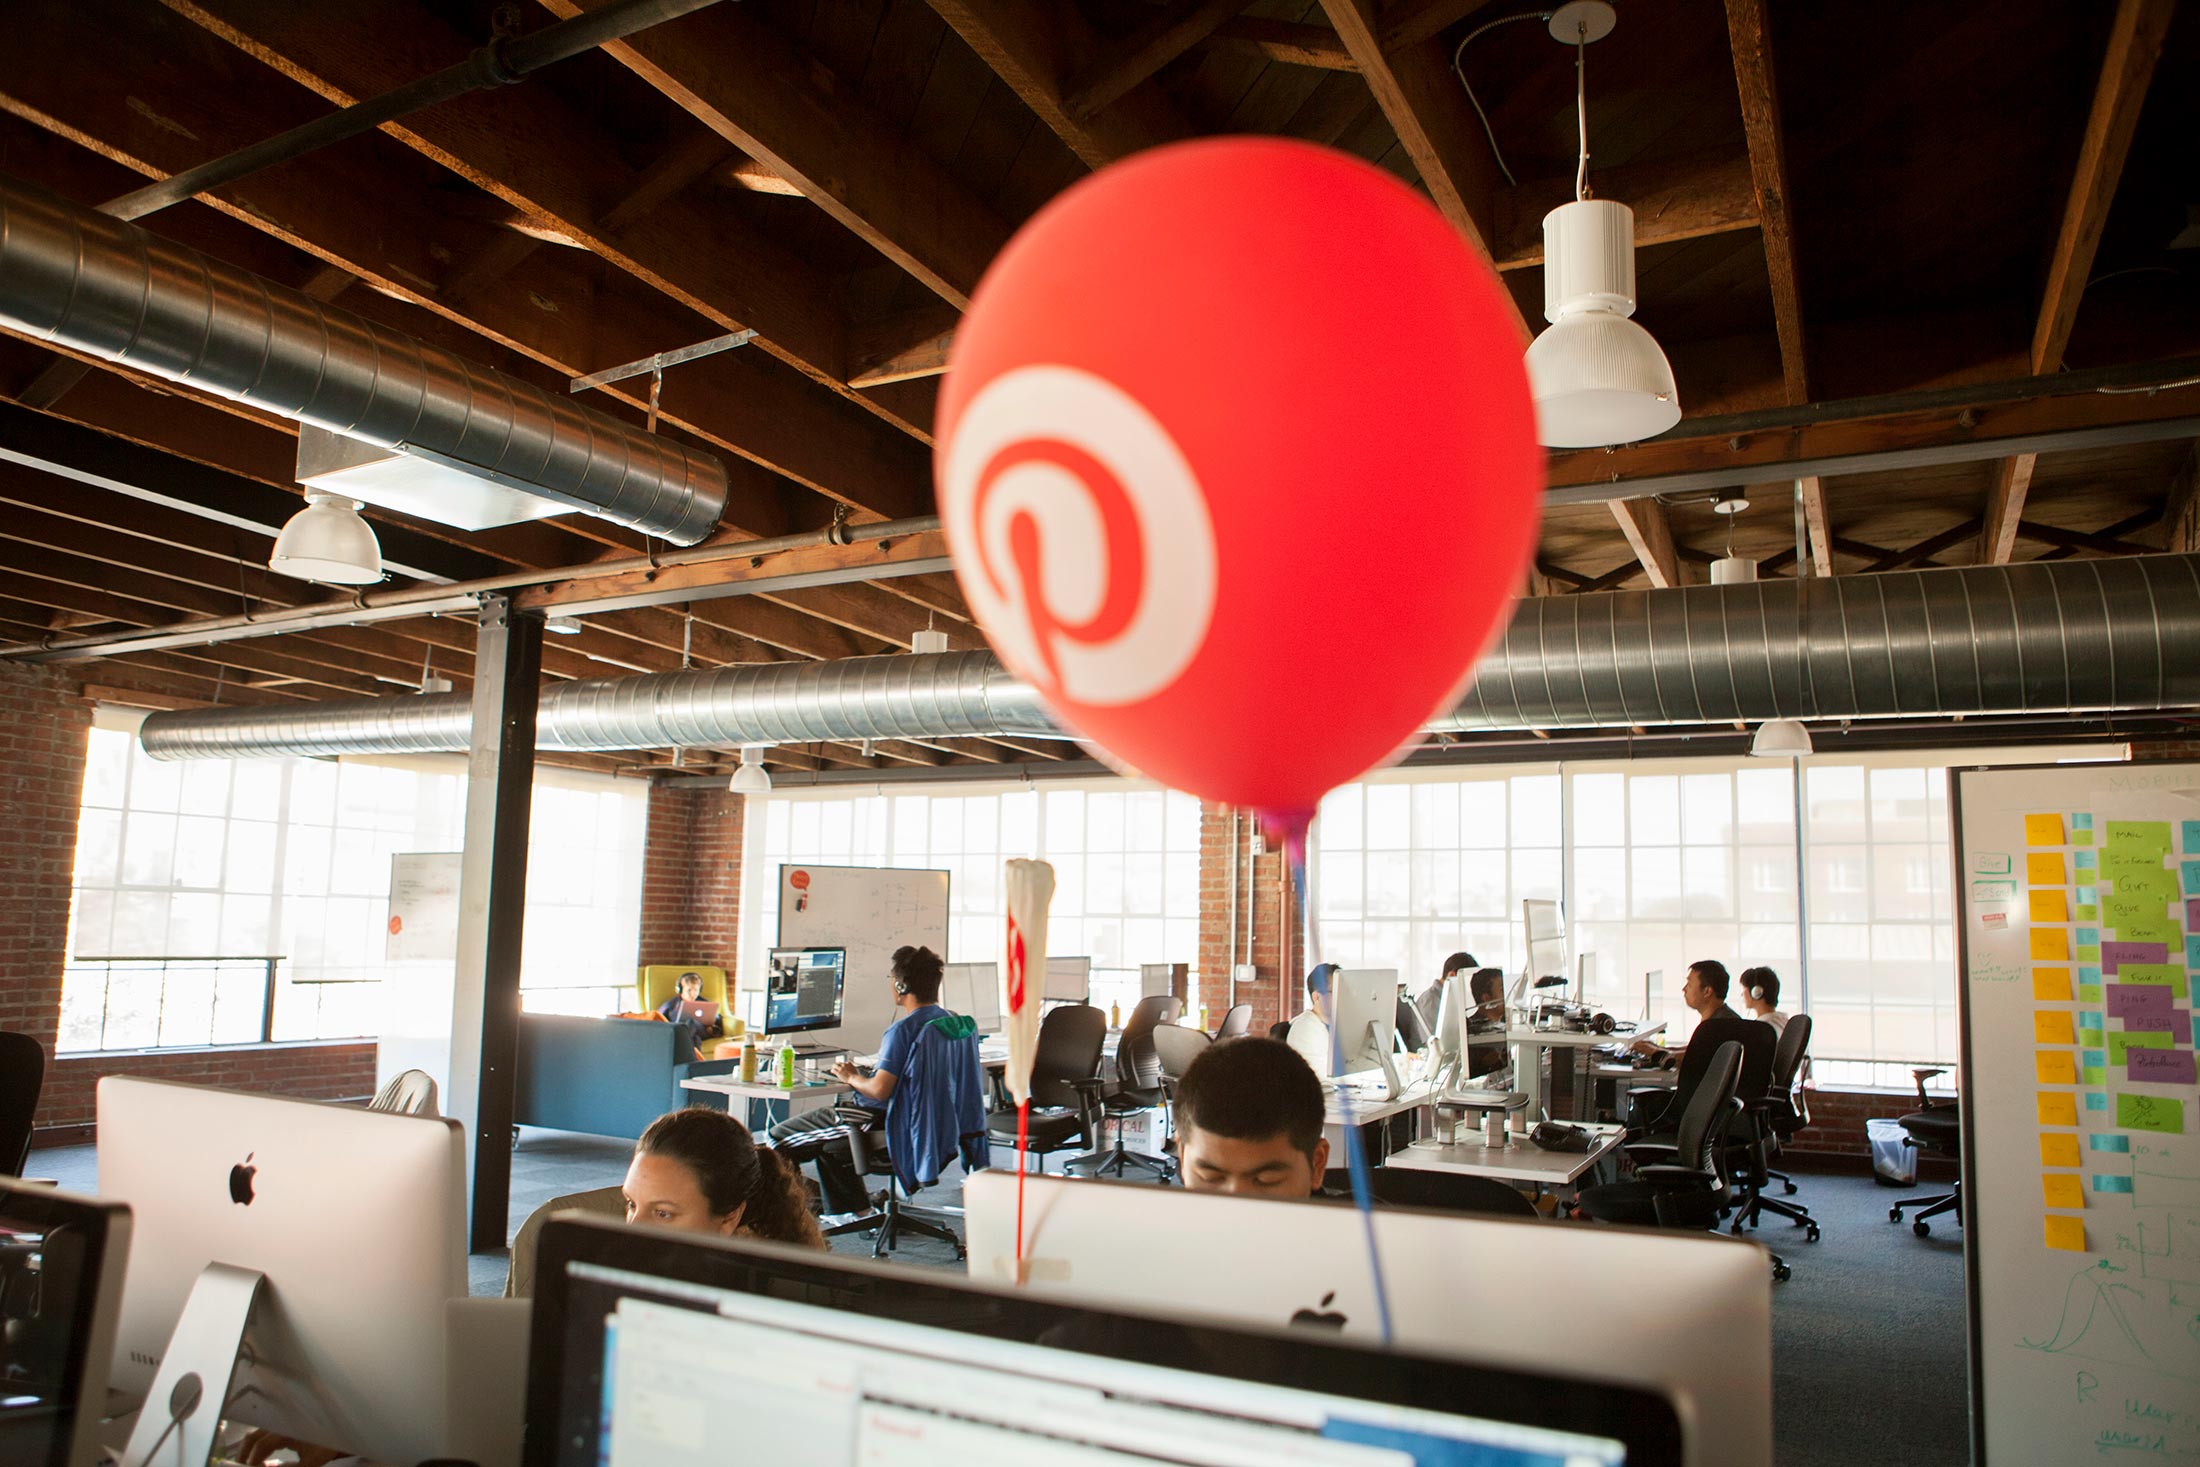 Pinterest Headquarters in San Francisco, in 2013.
